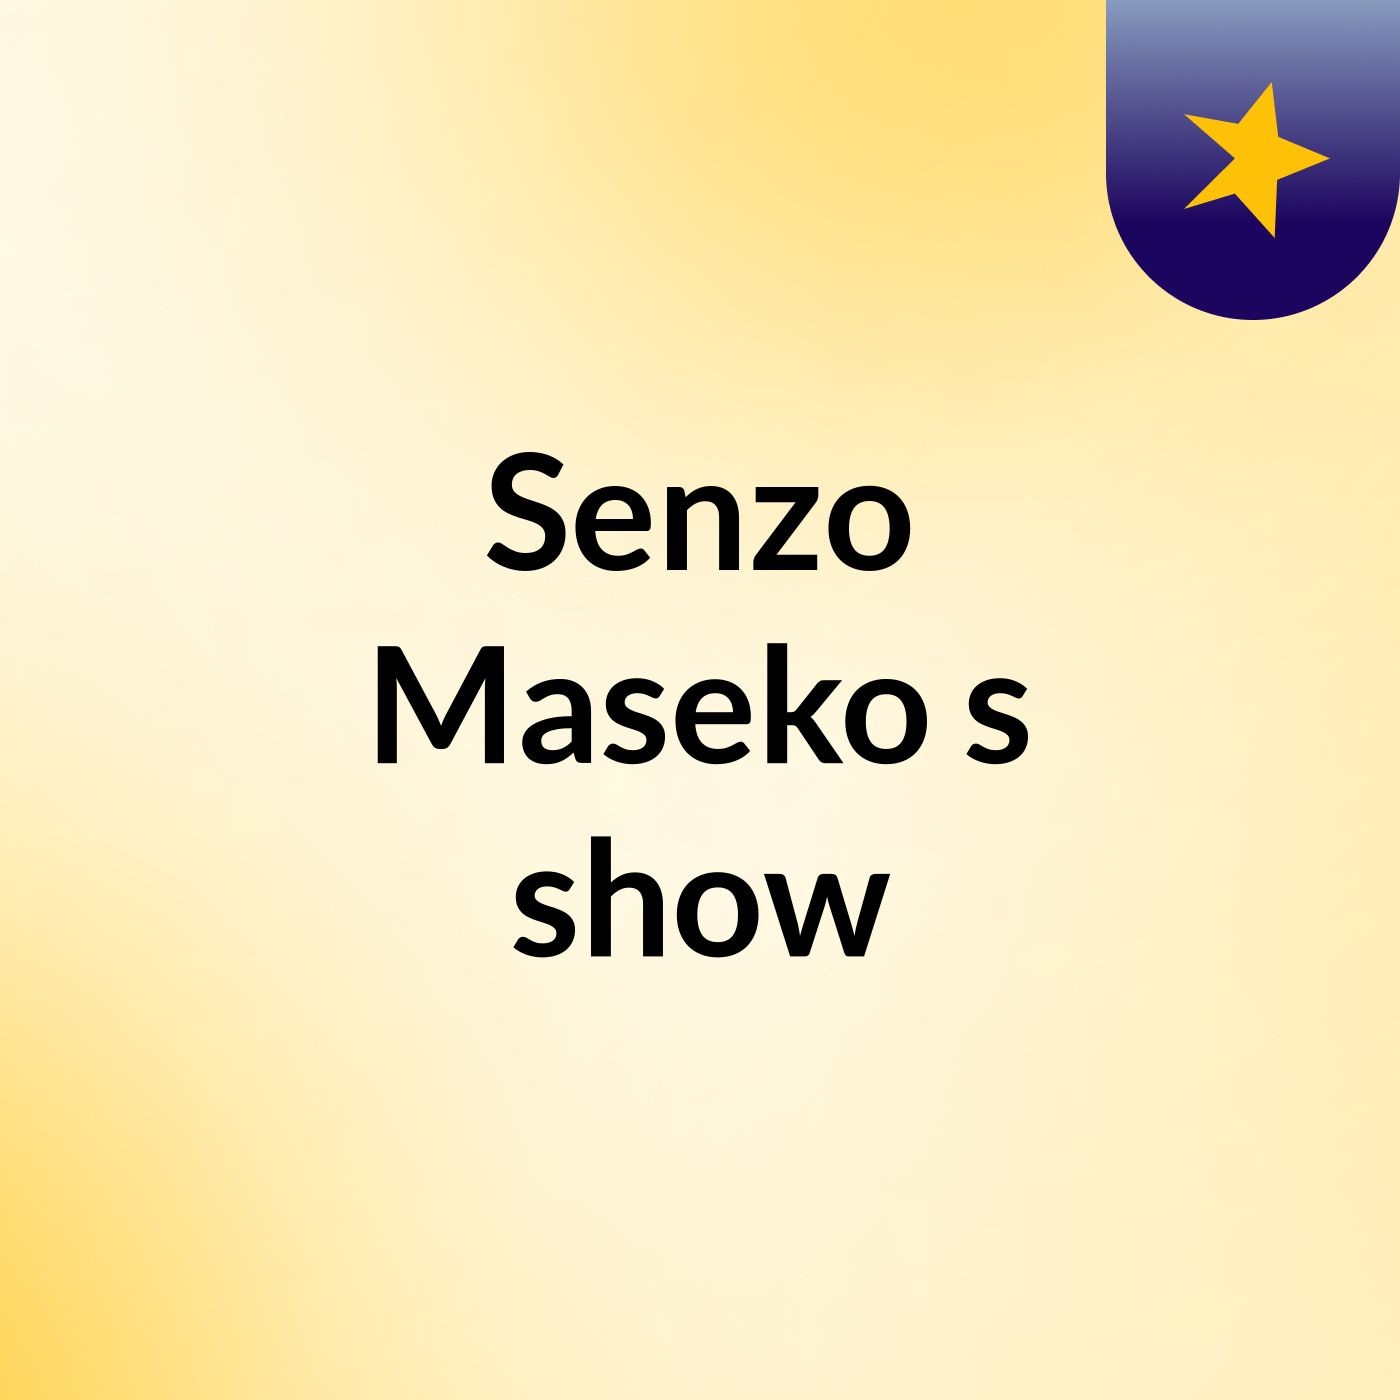 Senzo Maseko's show